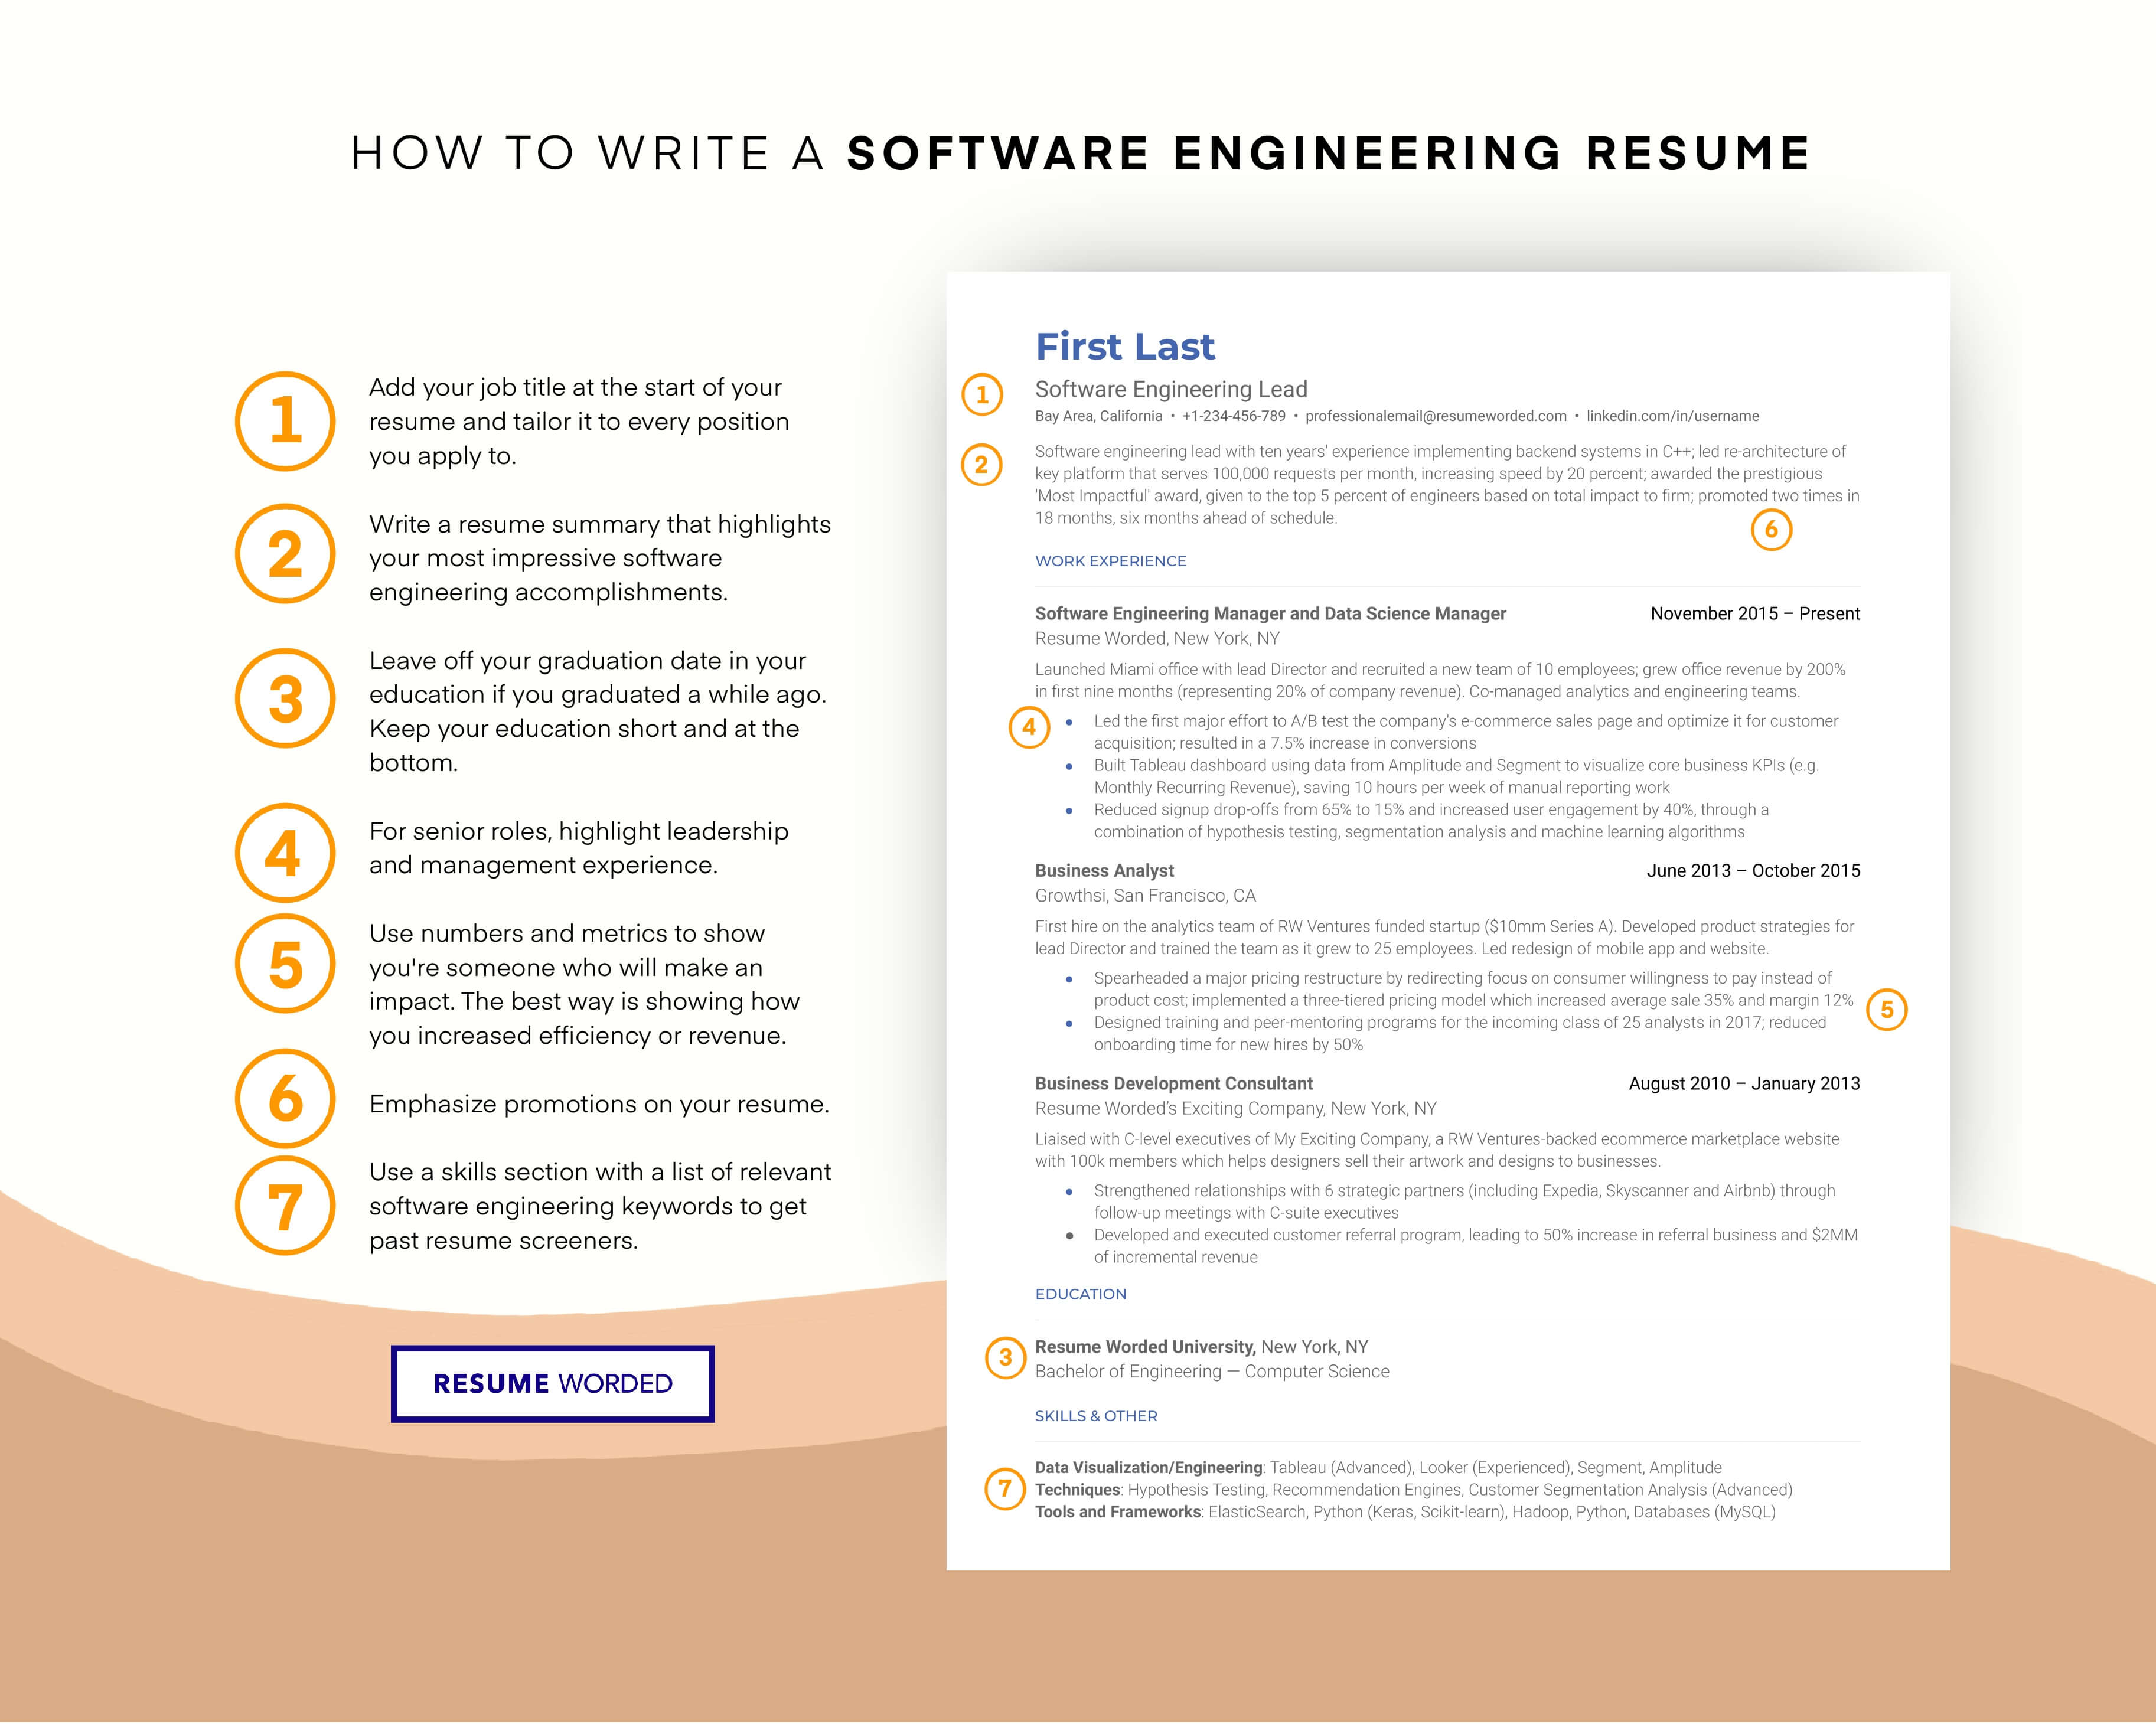 Highlight your software skills - Interior Design Assistant Resume